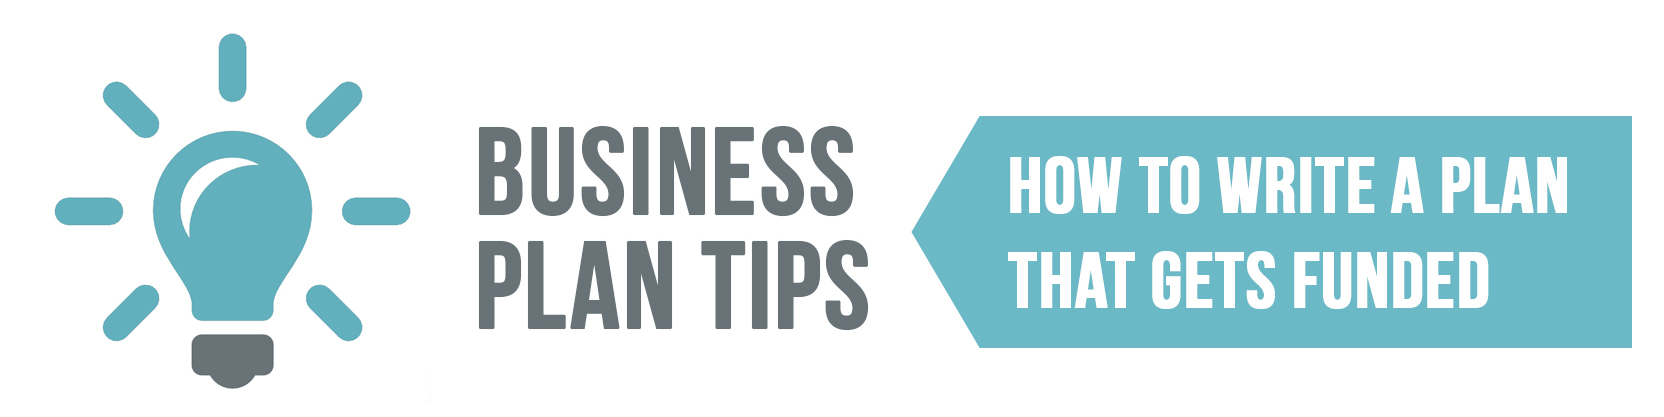 Business-Plan-Tips-Header